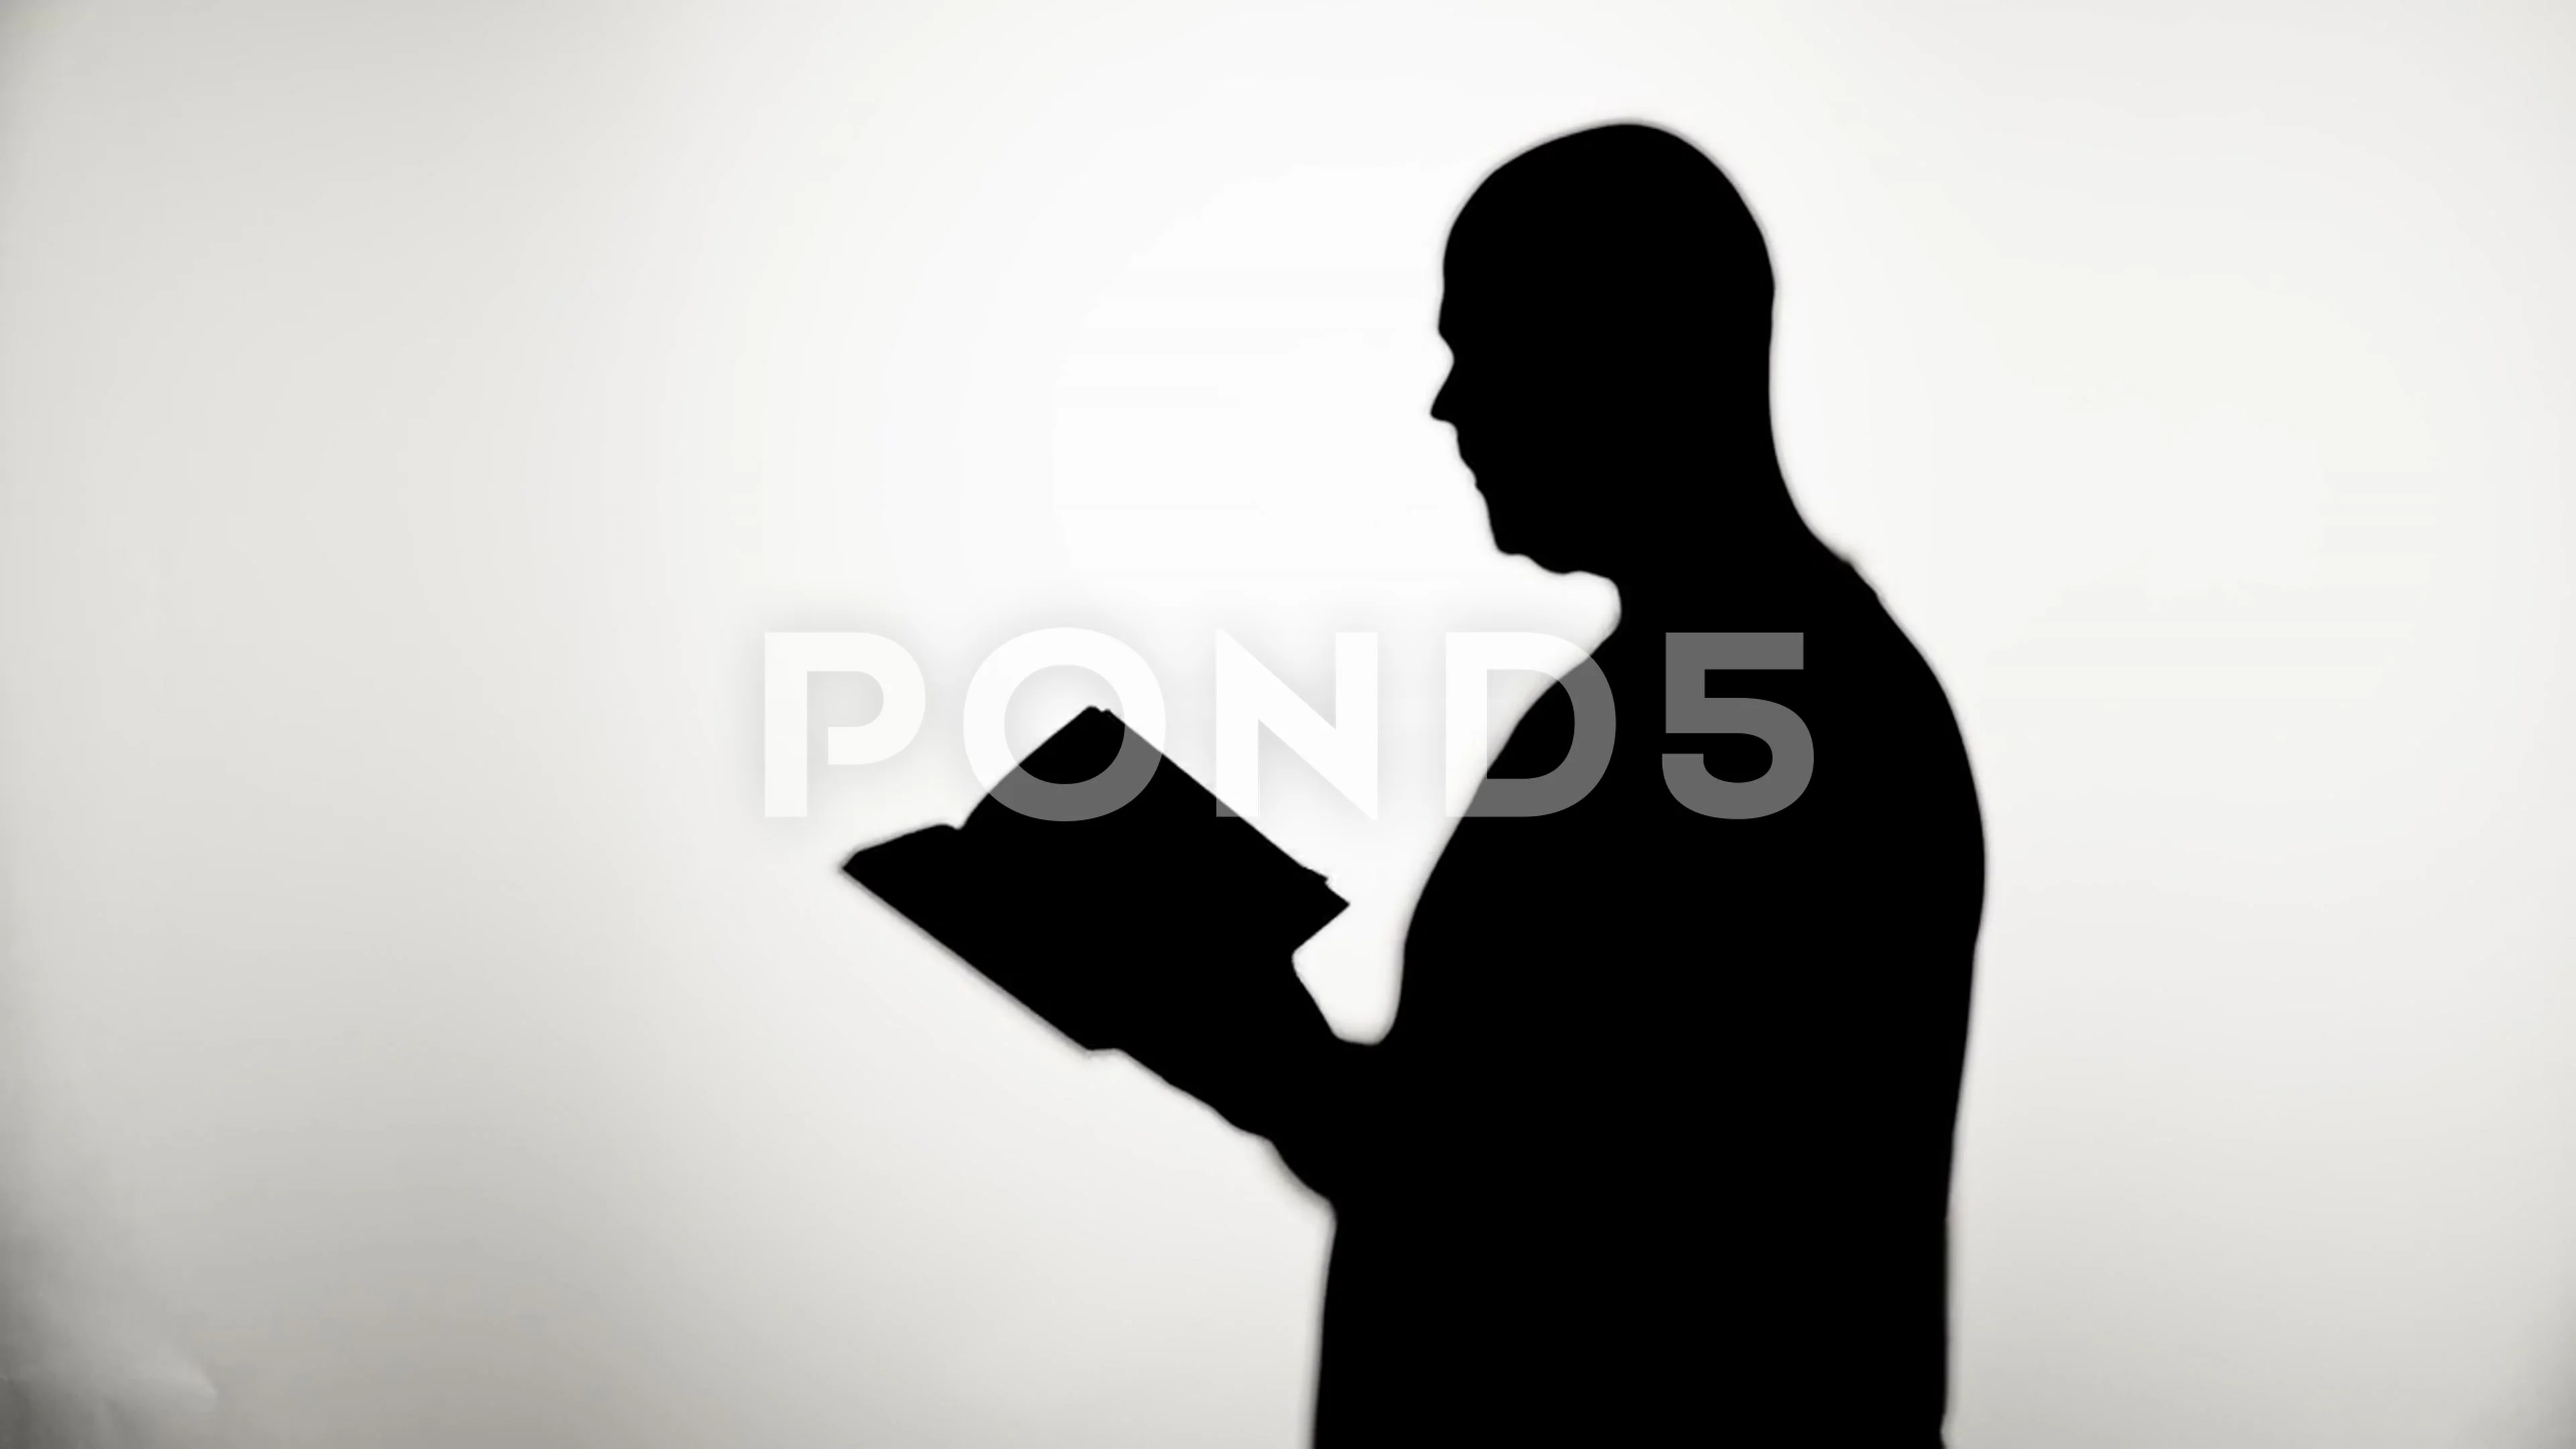 man reading silhouette